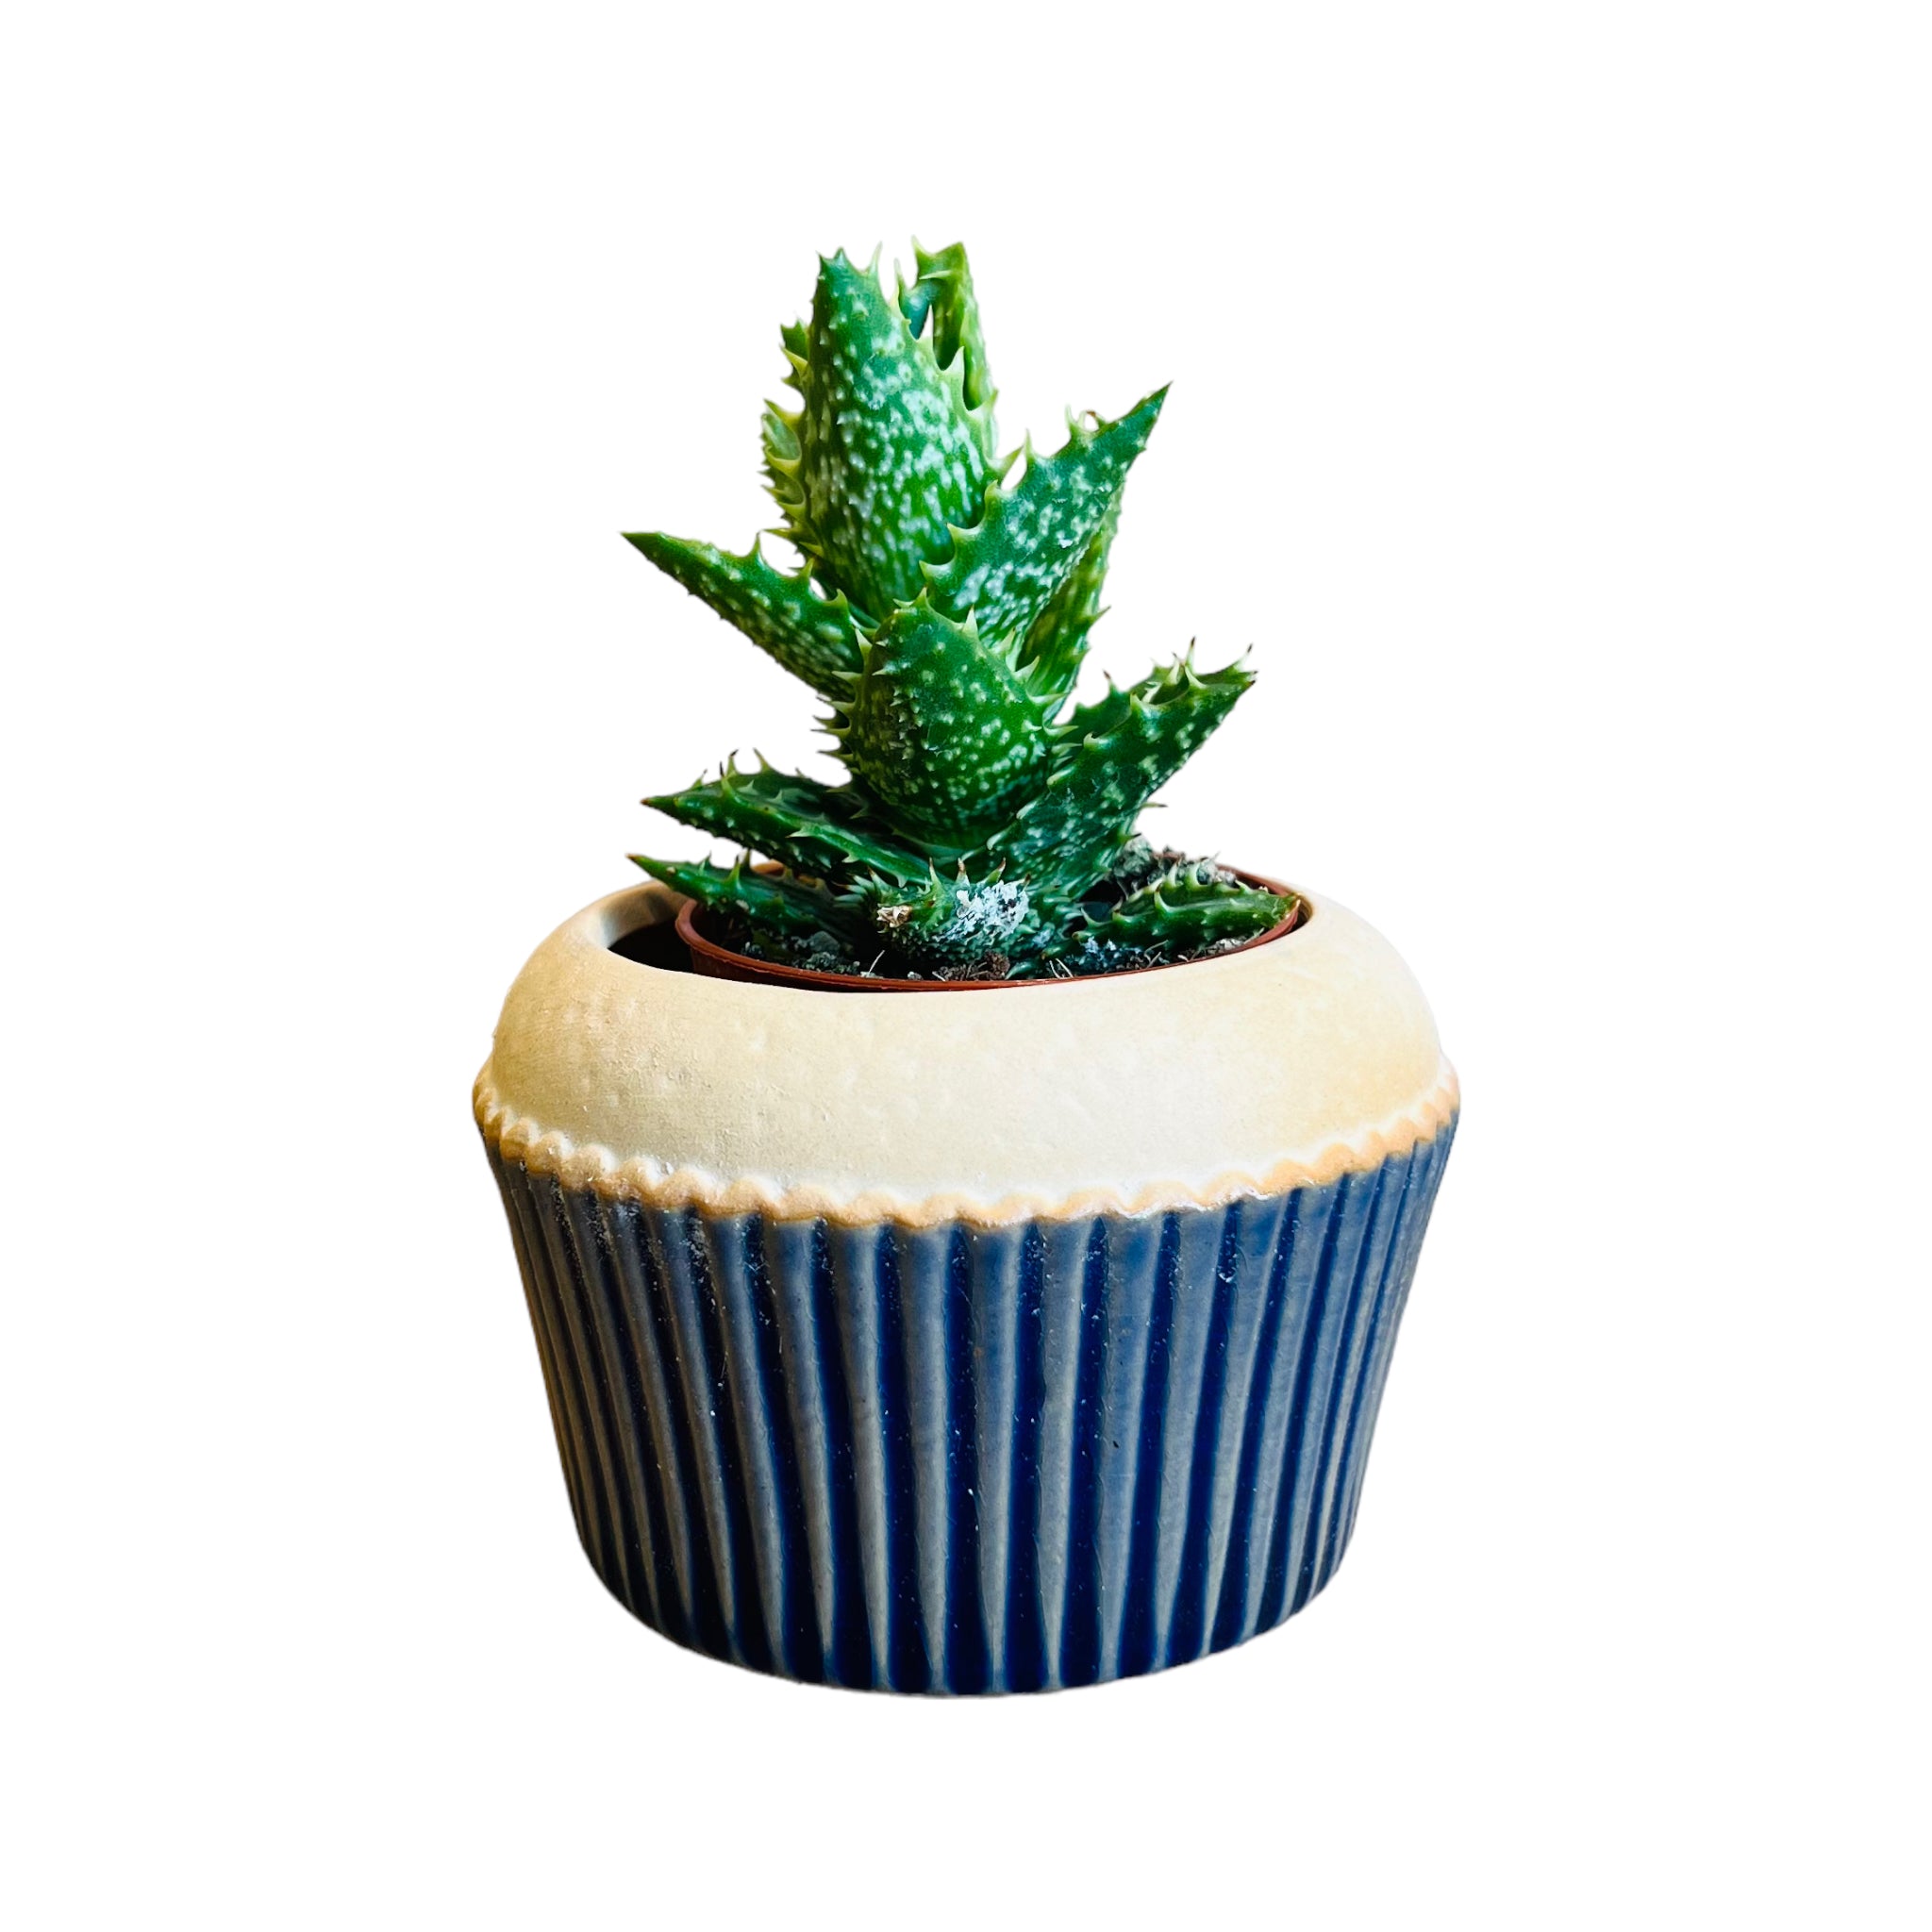 Cupcake Mini-Blumentopf - Verschiedene Farben, 8,4 x 5,4 cm